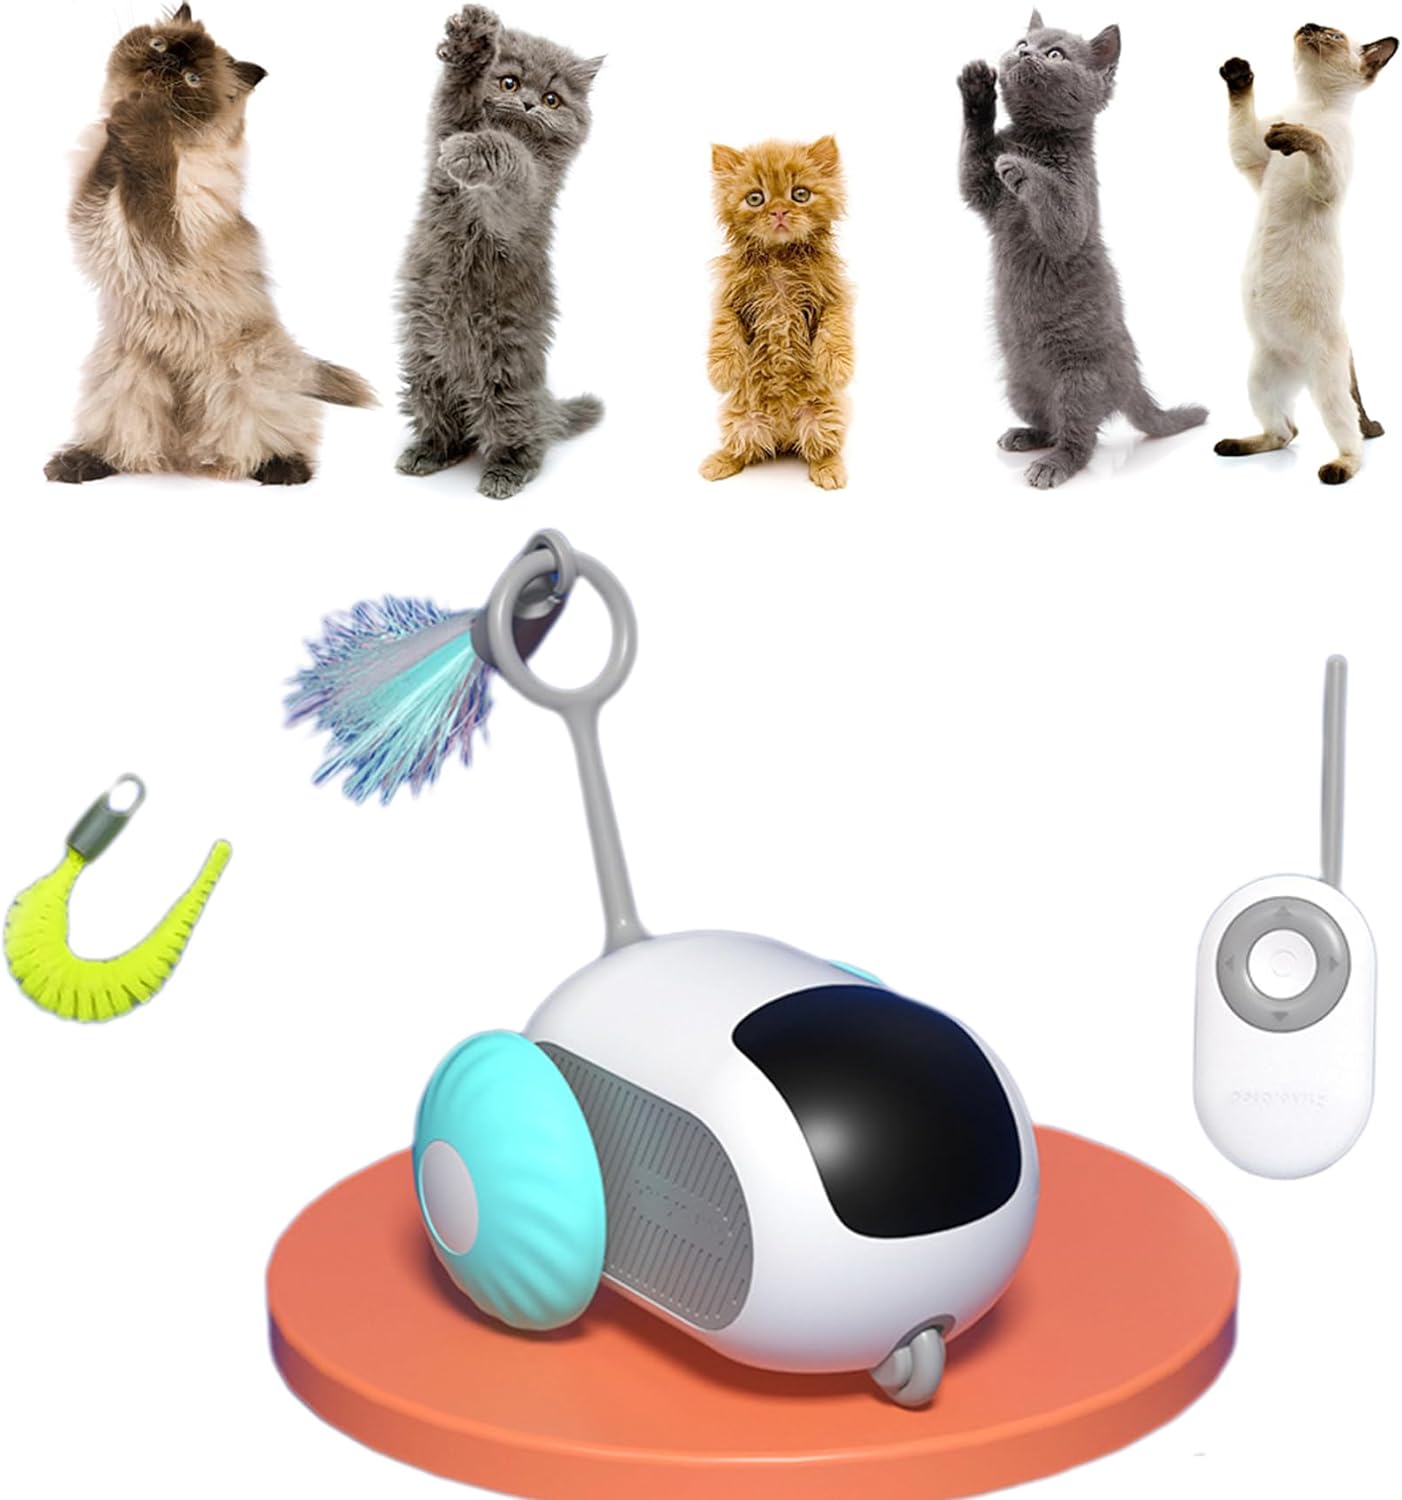 Interactive robotic cat toy